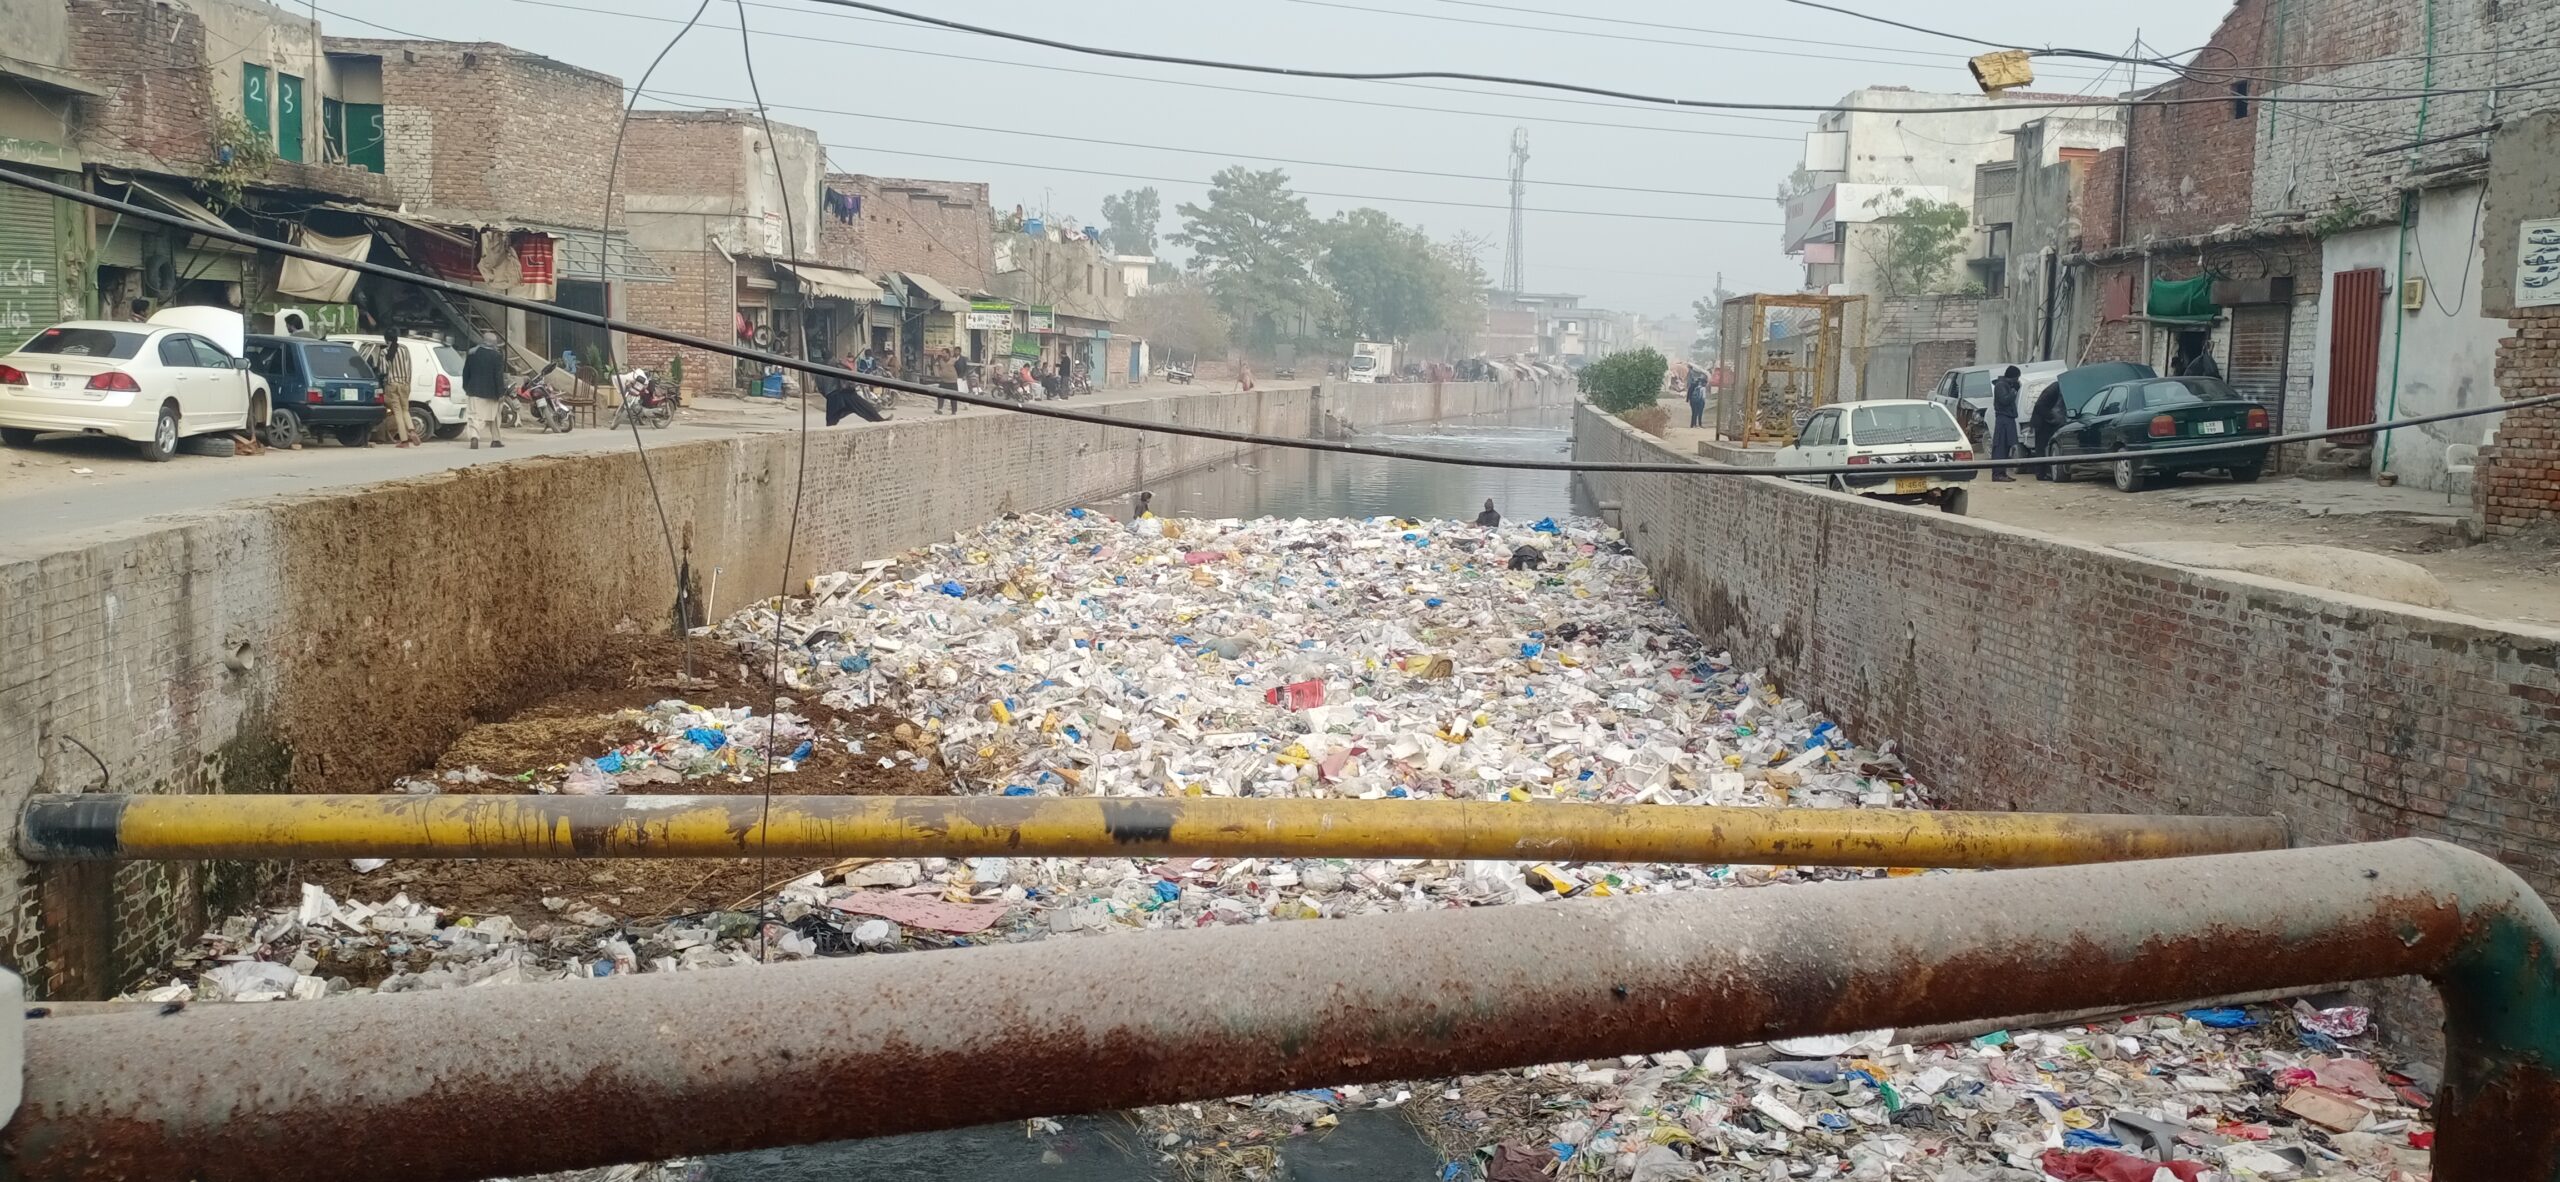 Forurenet flod i Pakistan